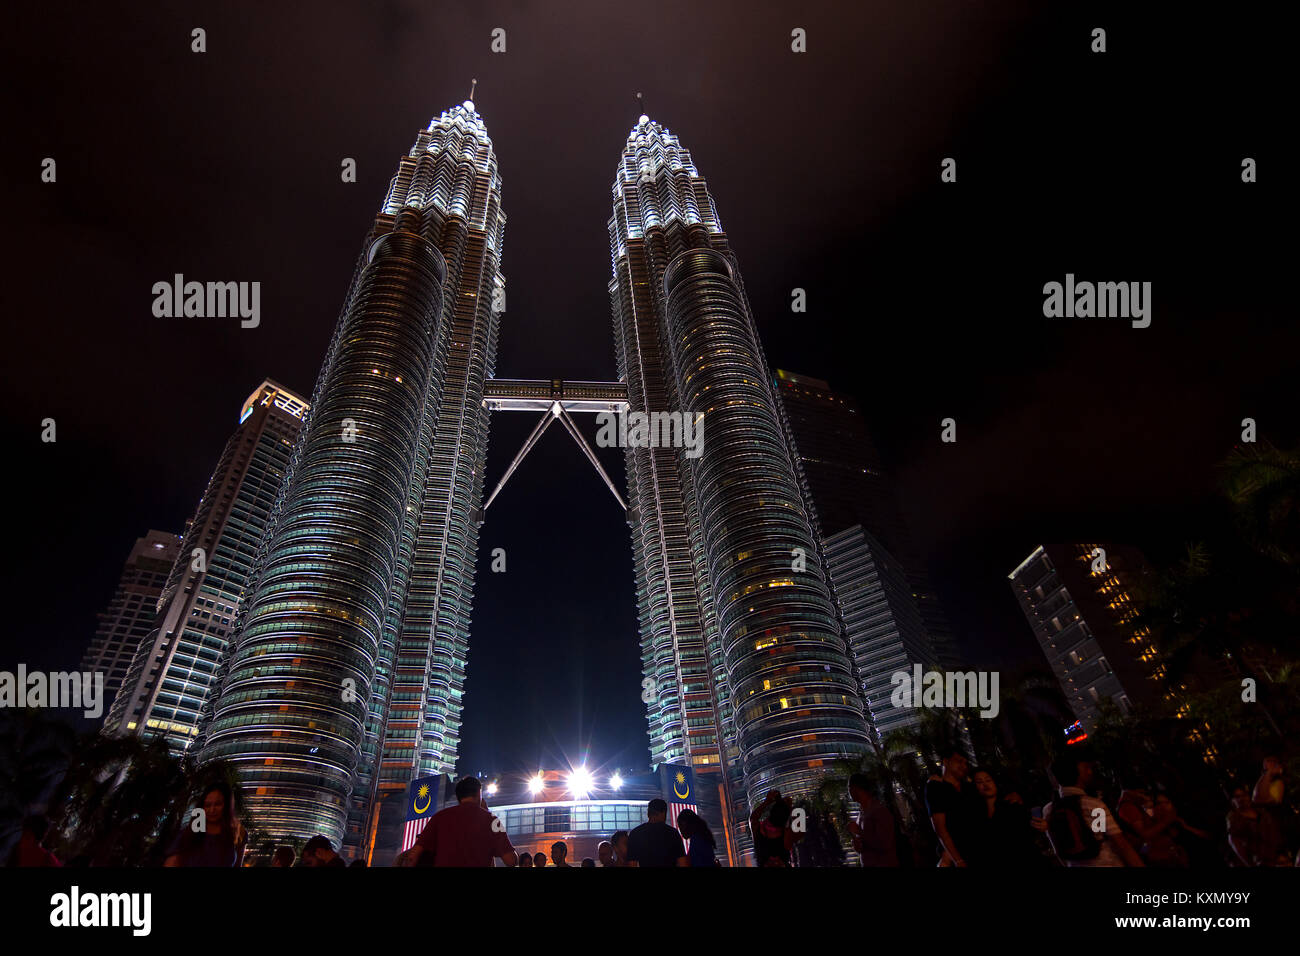 Petronas twin towers, Kuala Lumpur, Malaysia 10-09-2016.  Low angle of the Petronas twin towers, Kuala Lumpur, Malaysia with people in the foreground. Stock Photo